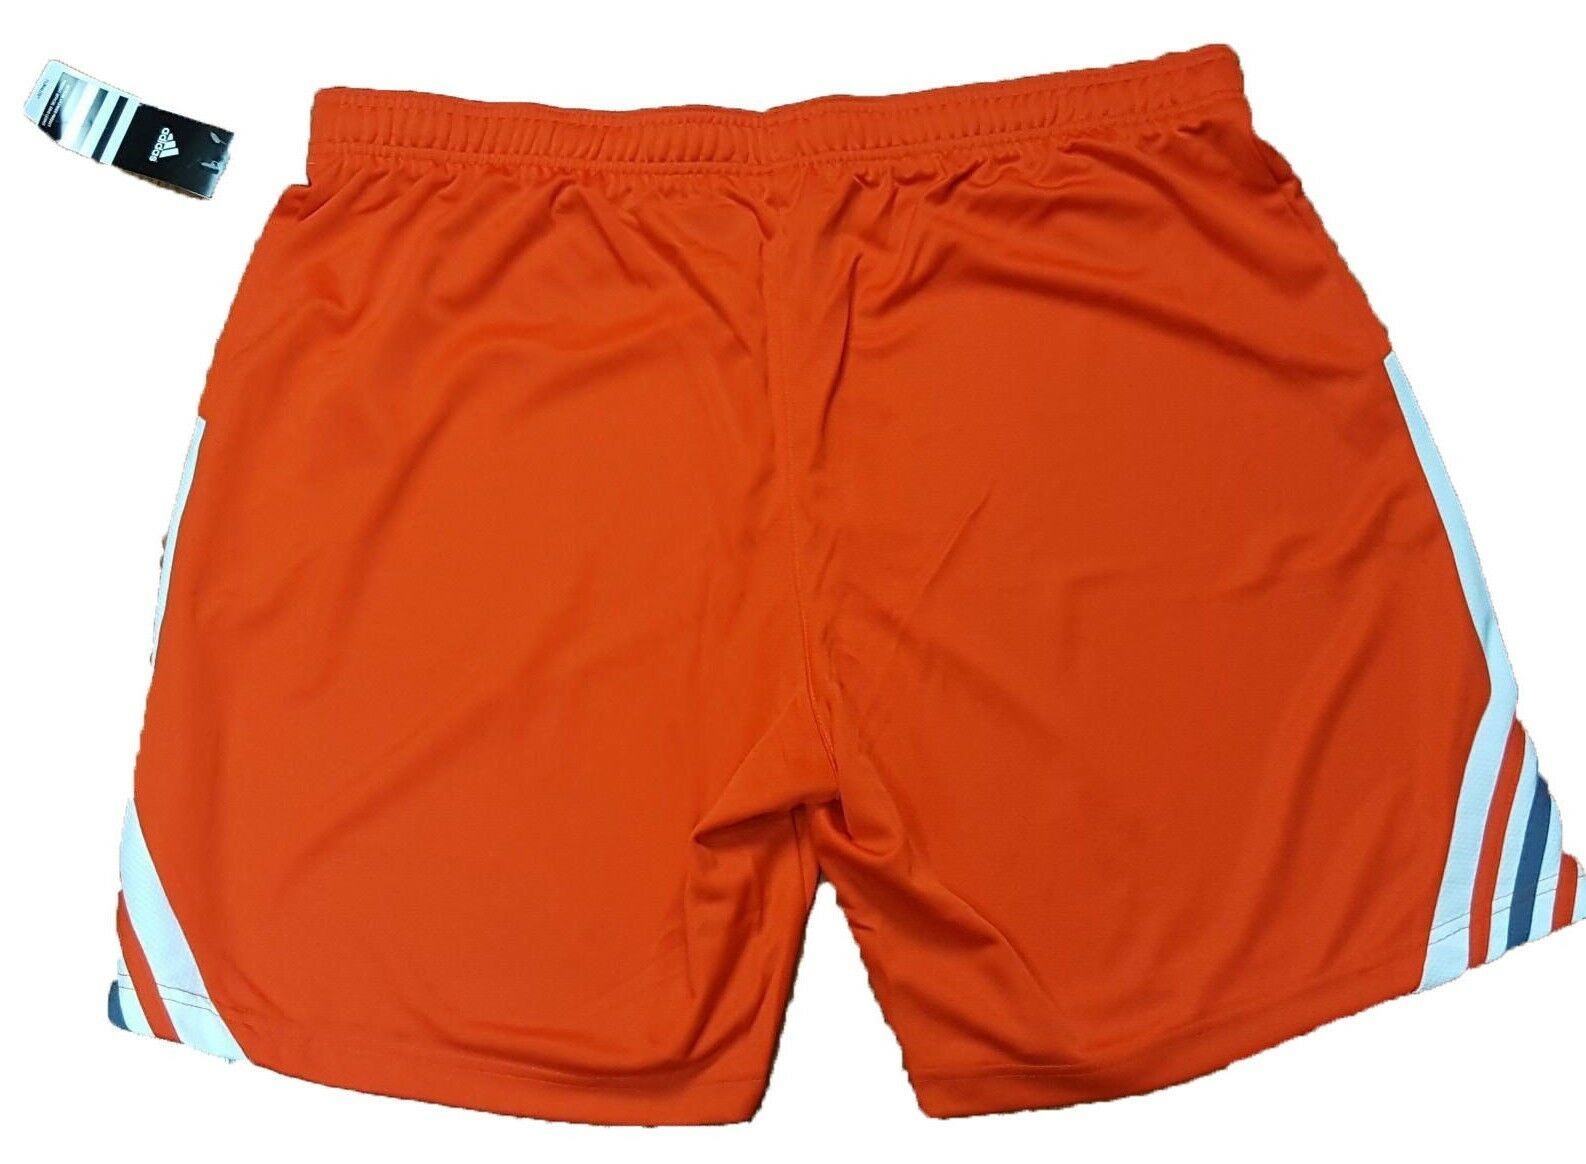 Adidas Shorts Utilitaire Orange Blanc Athlétique Basketball Sports 2XL ...